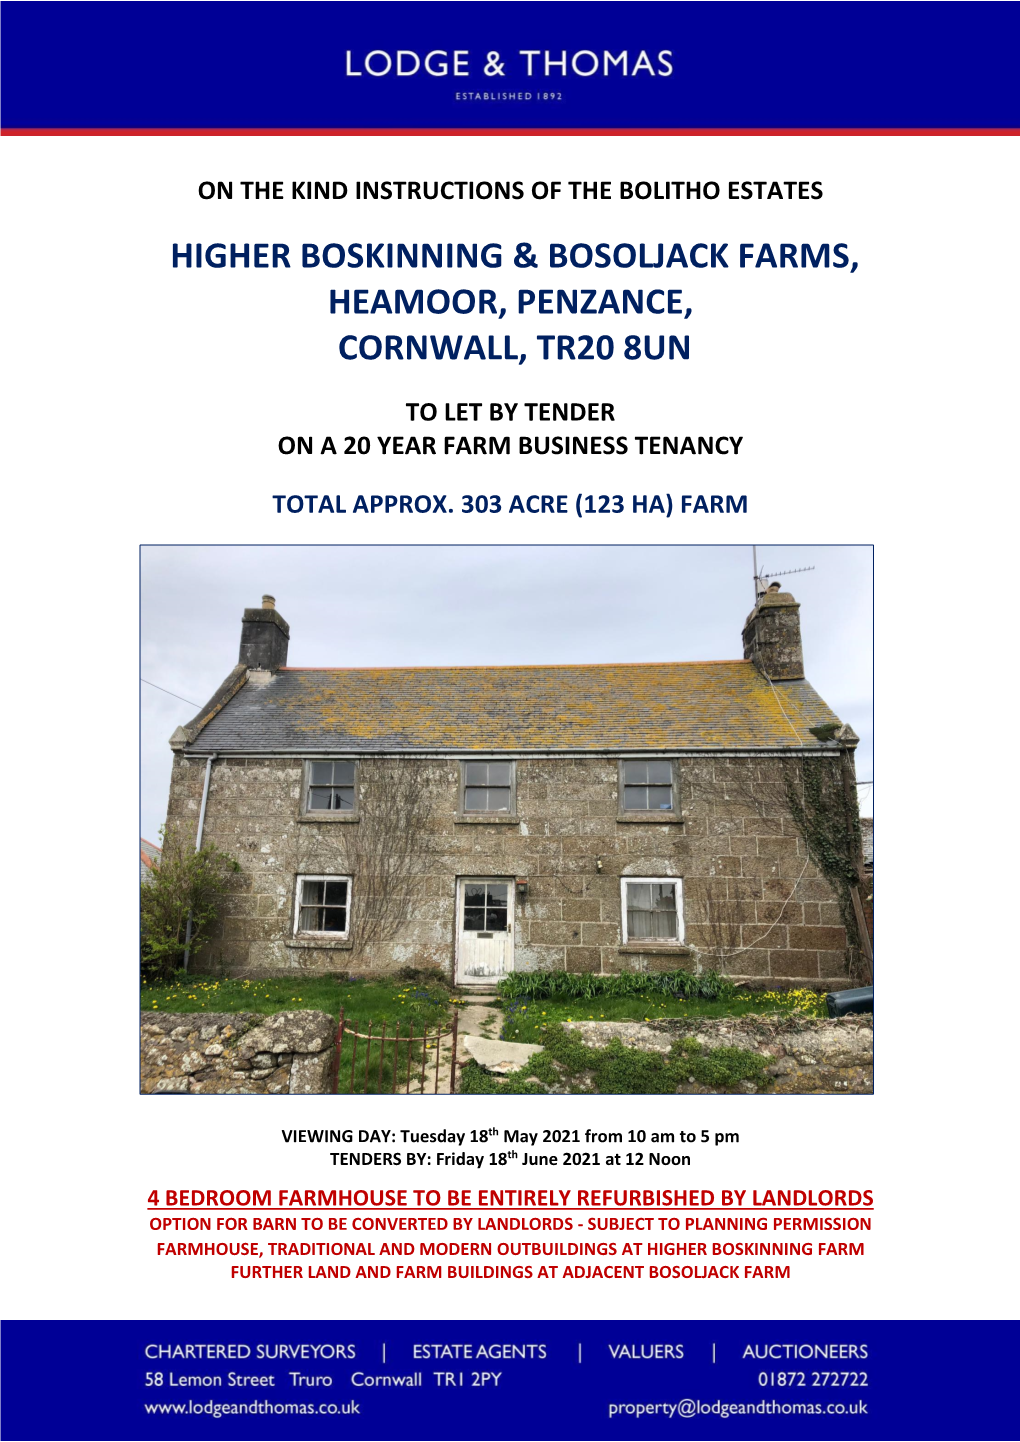 Higher Boskinning & Bosoljack Farms, Heamoor, Penzance, Cornwall, Tr20